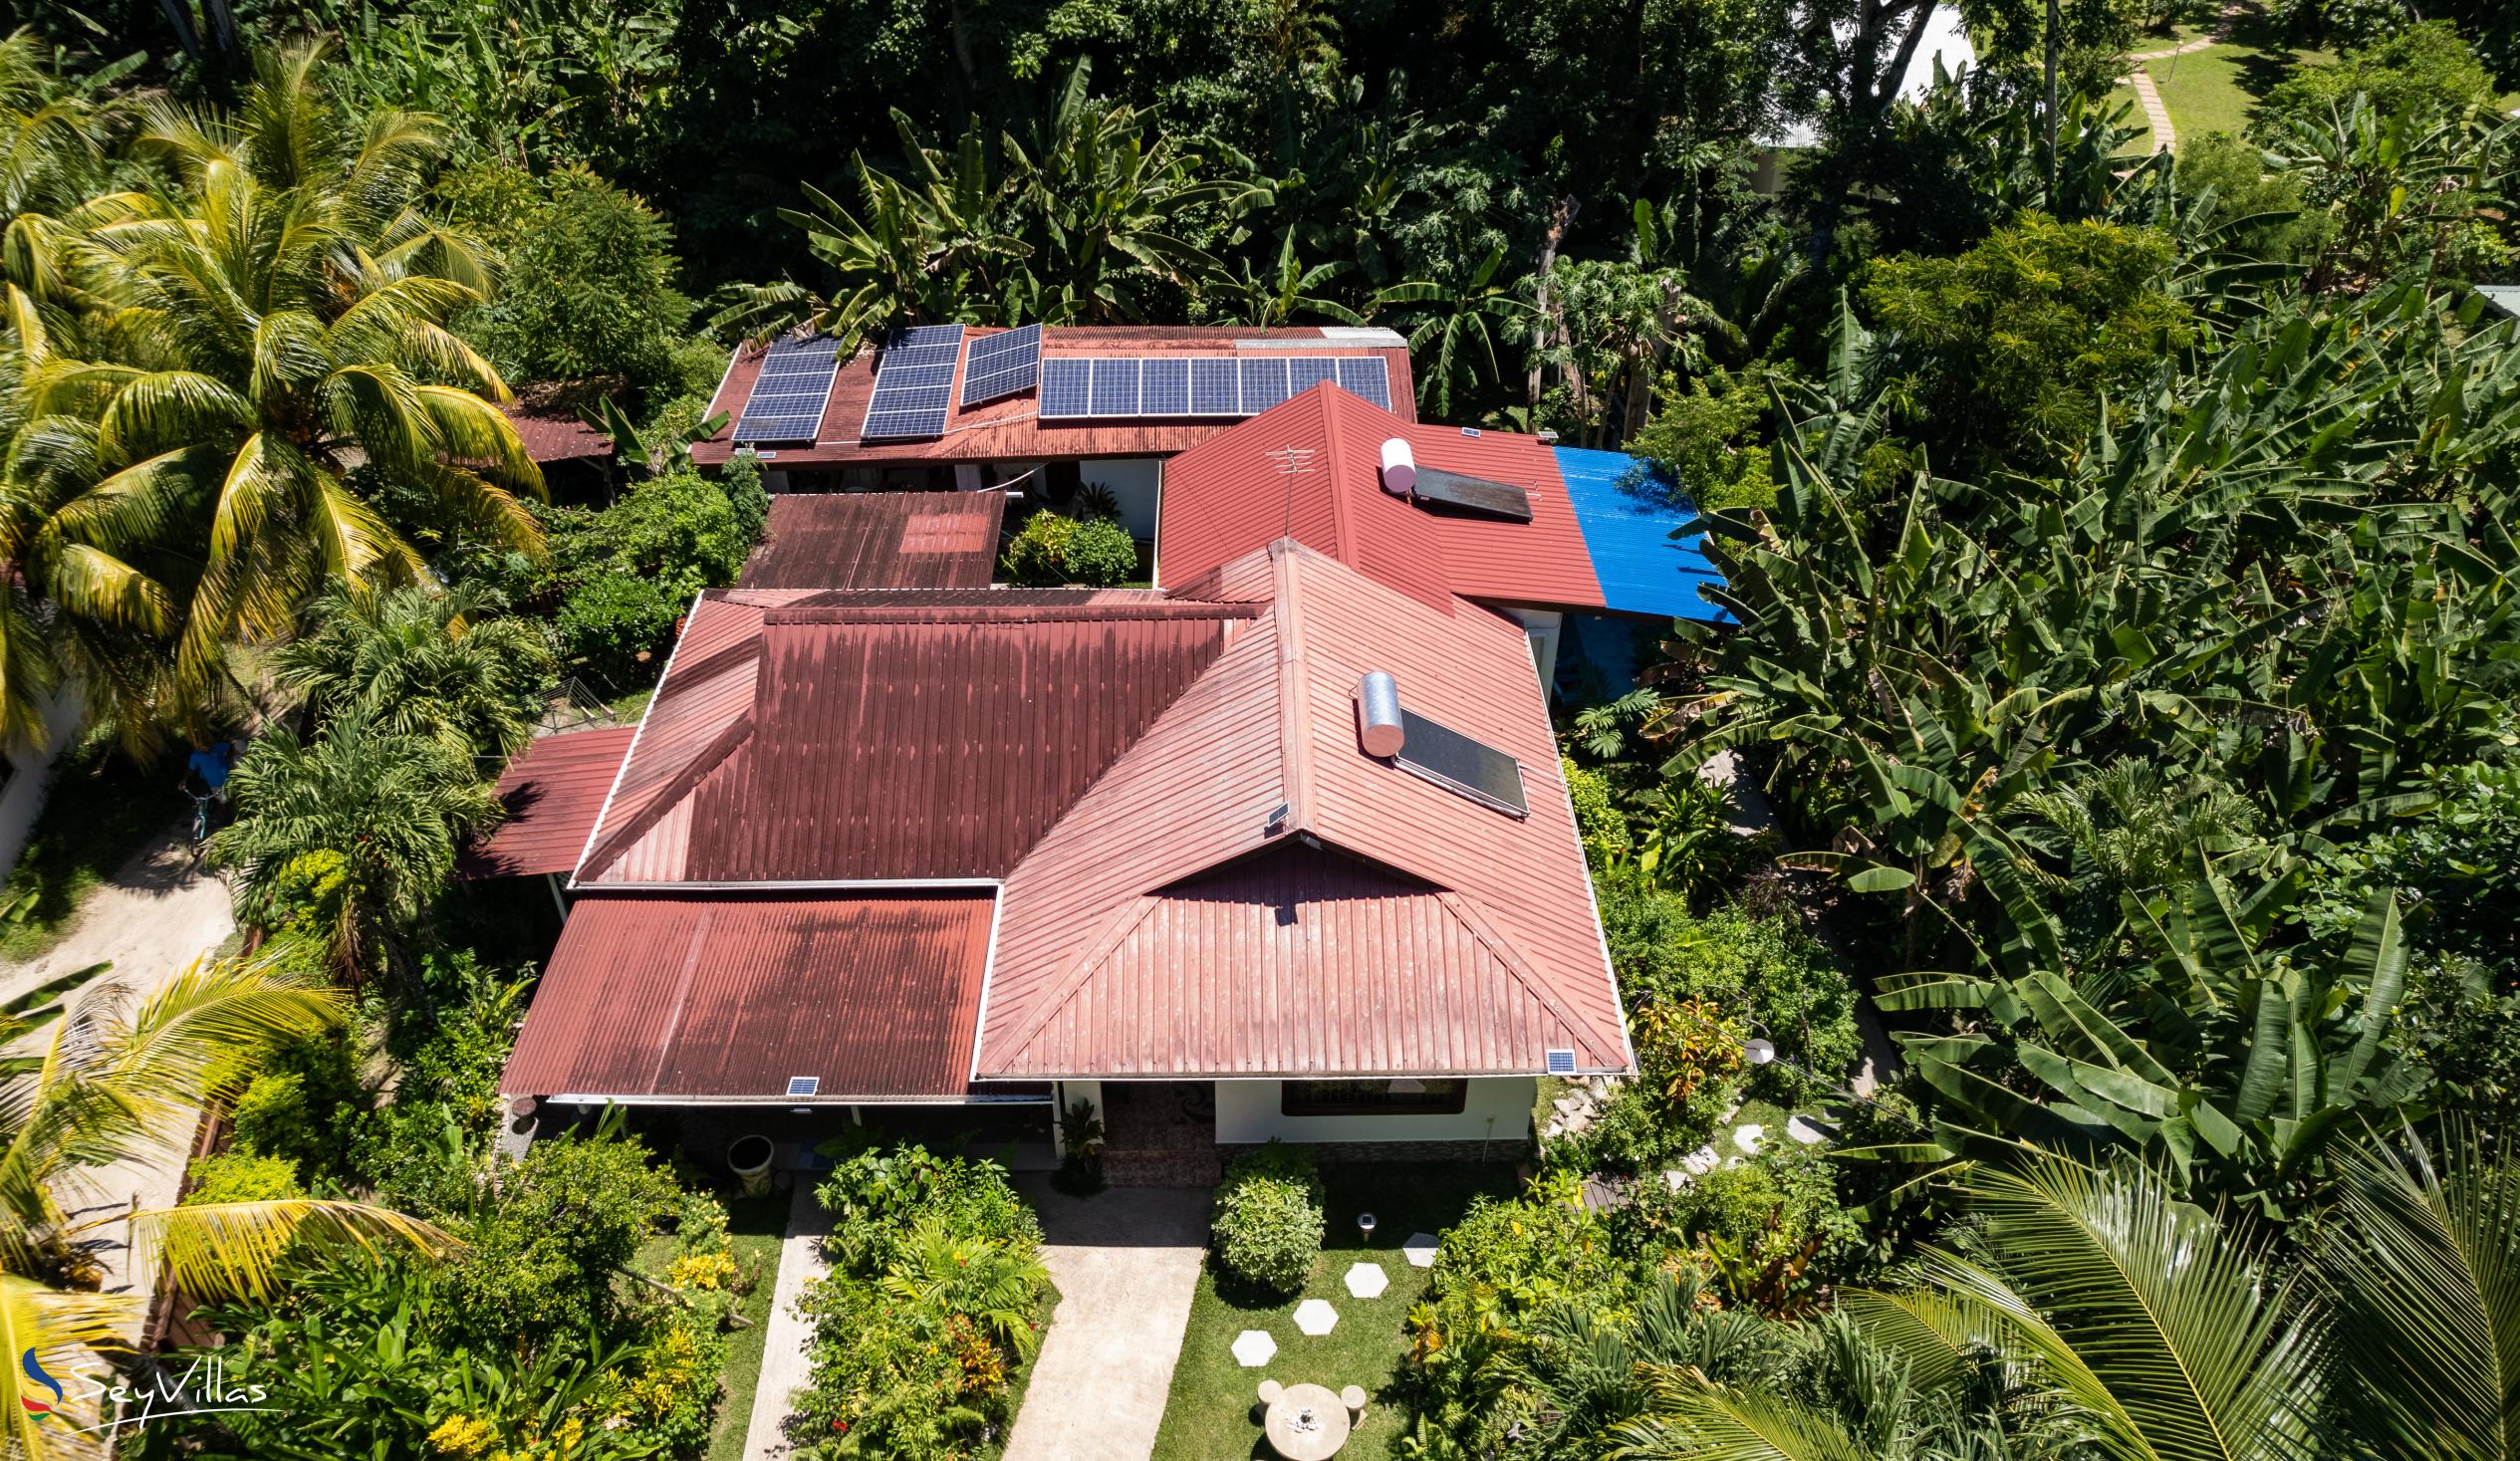 Photo 3: Buisson Guest House - Outdoor area - La Digue (Seychelles)